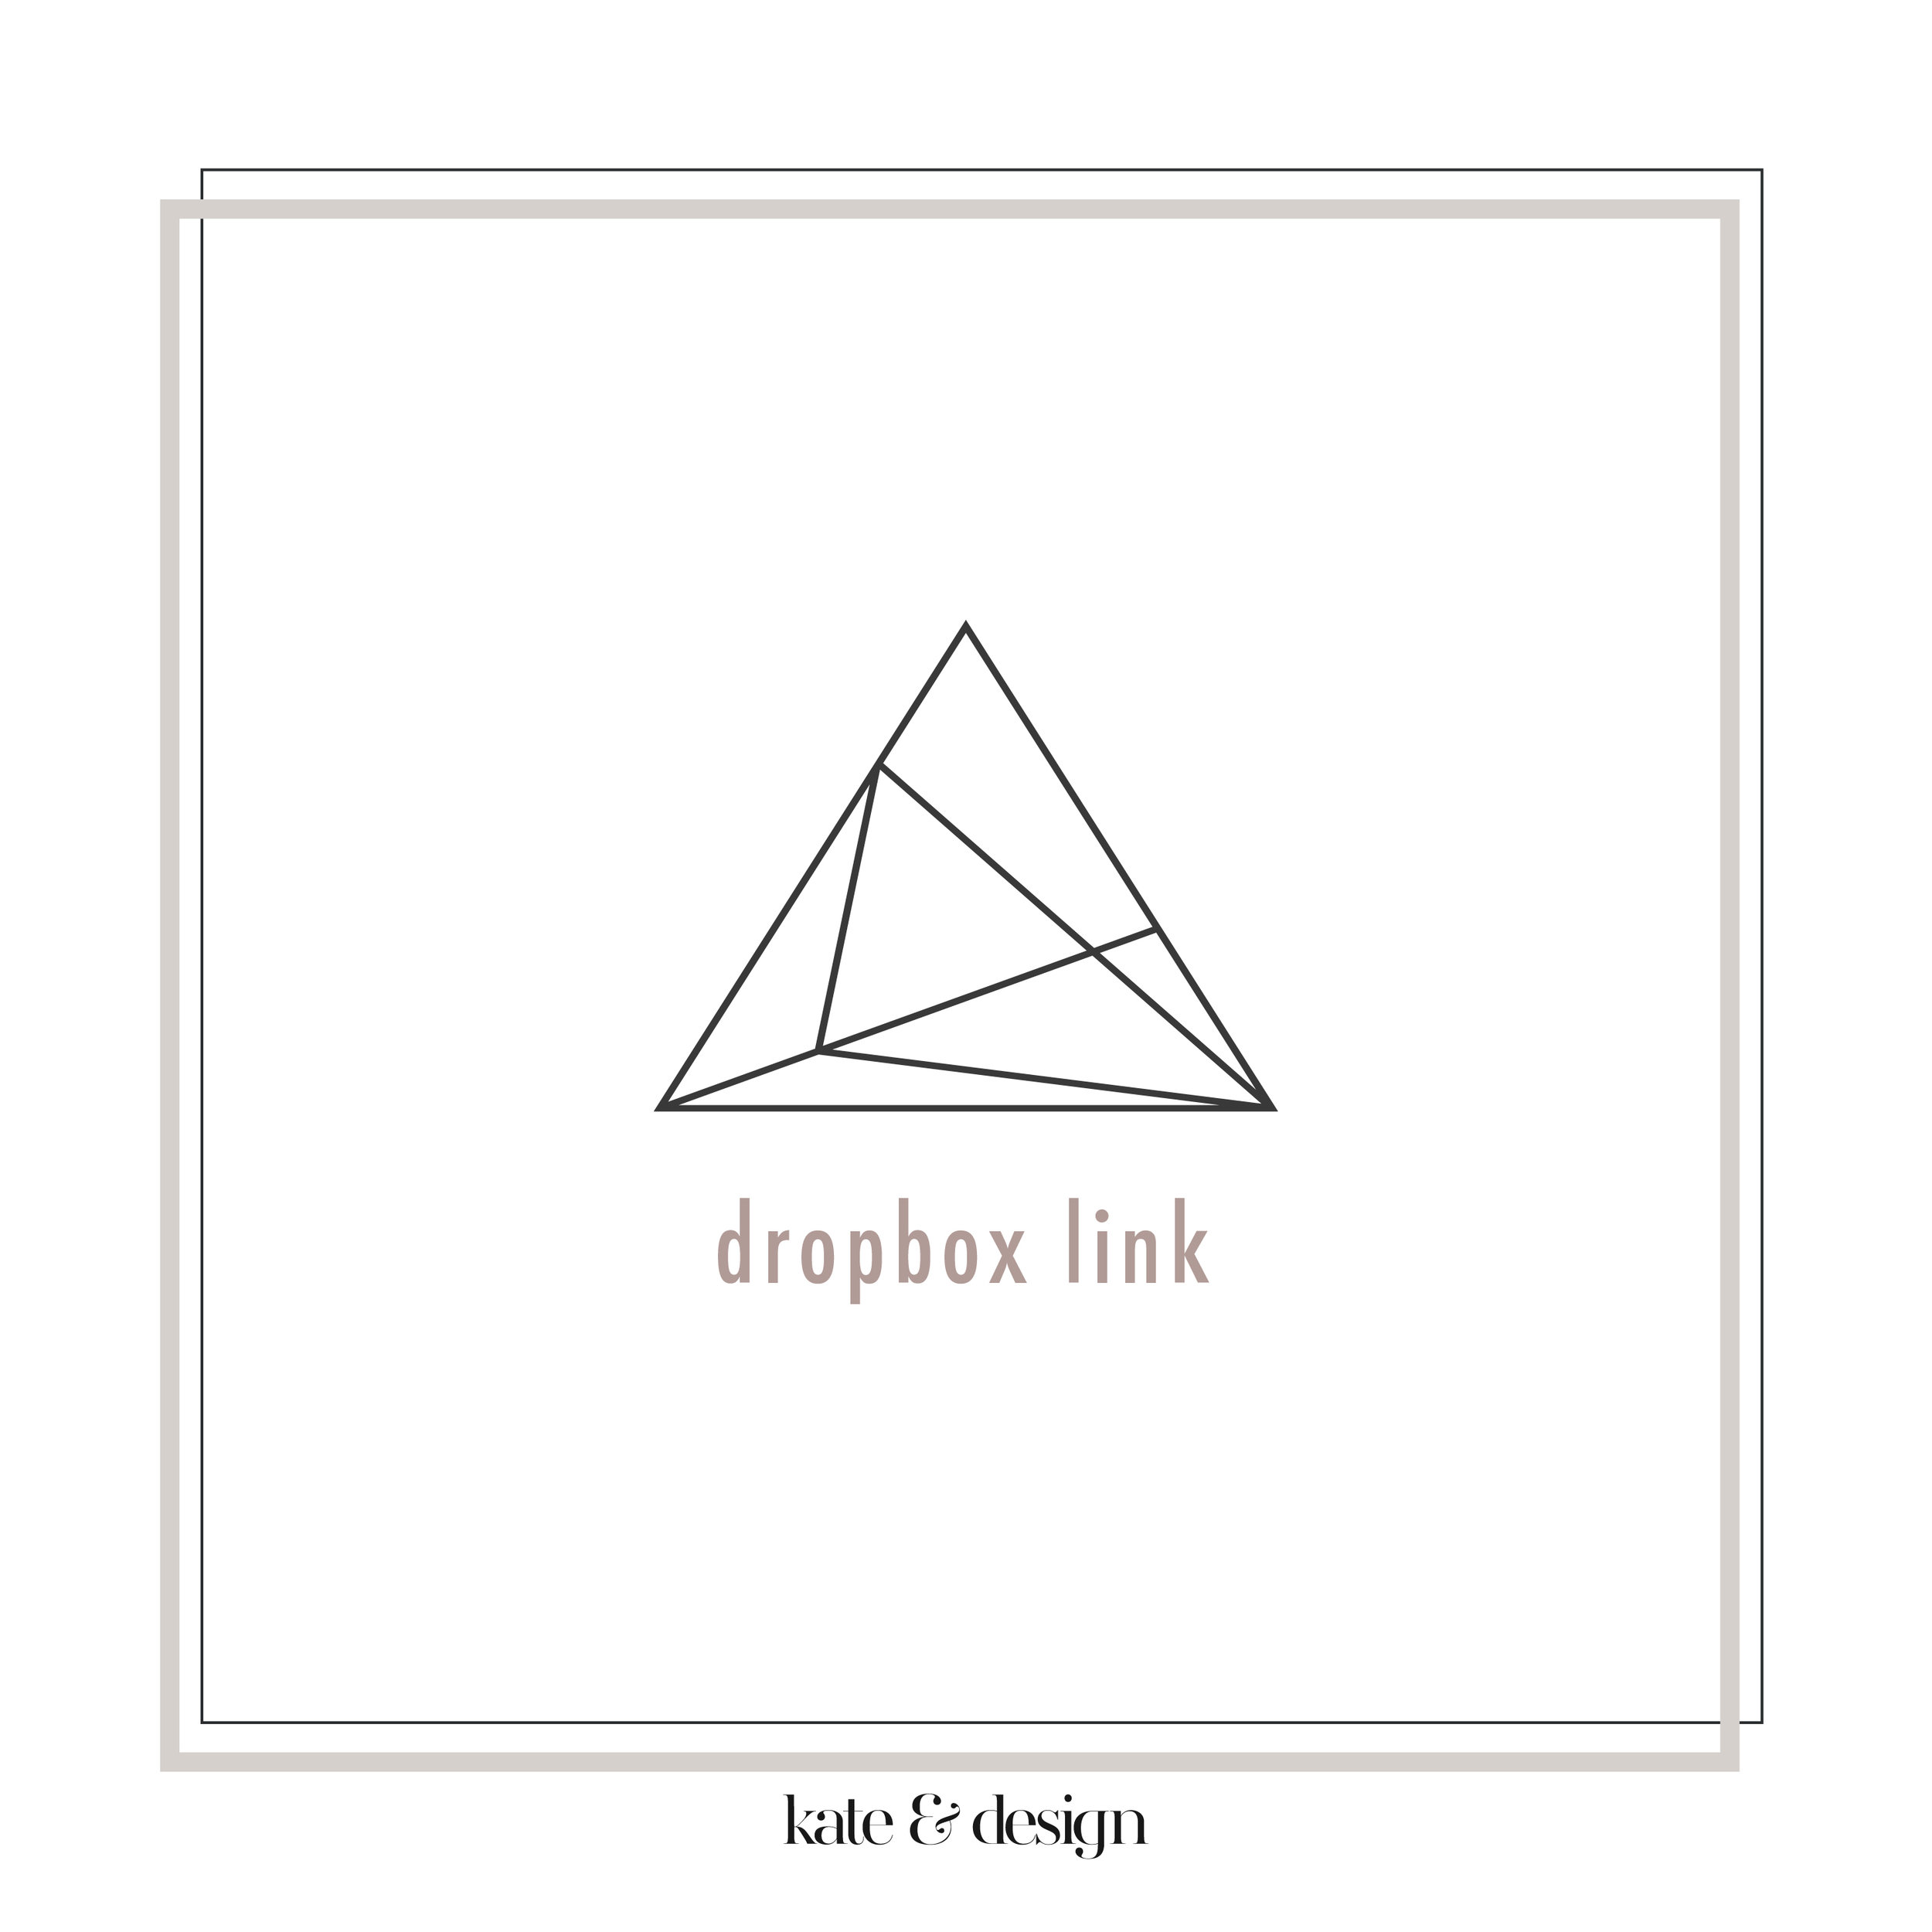 Copy of Copy of dropbox link